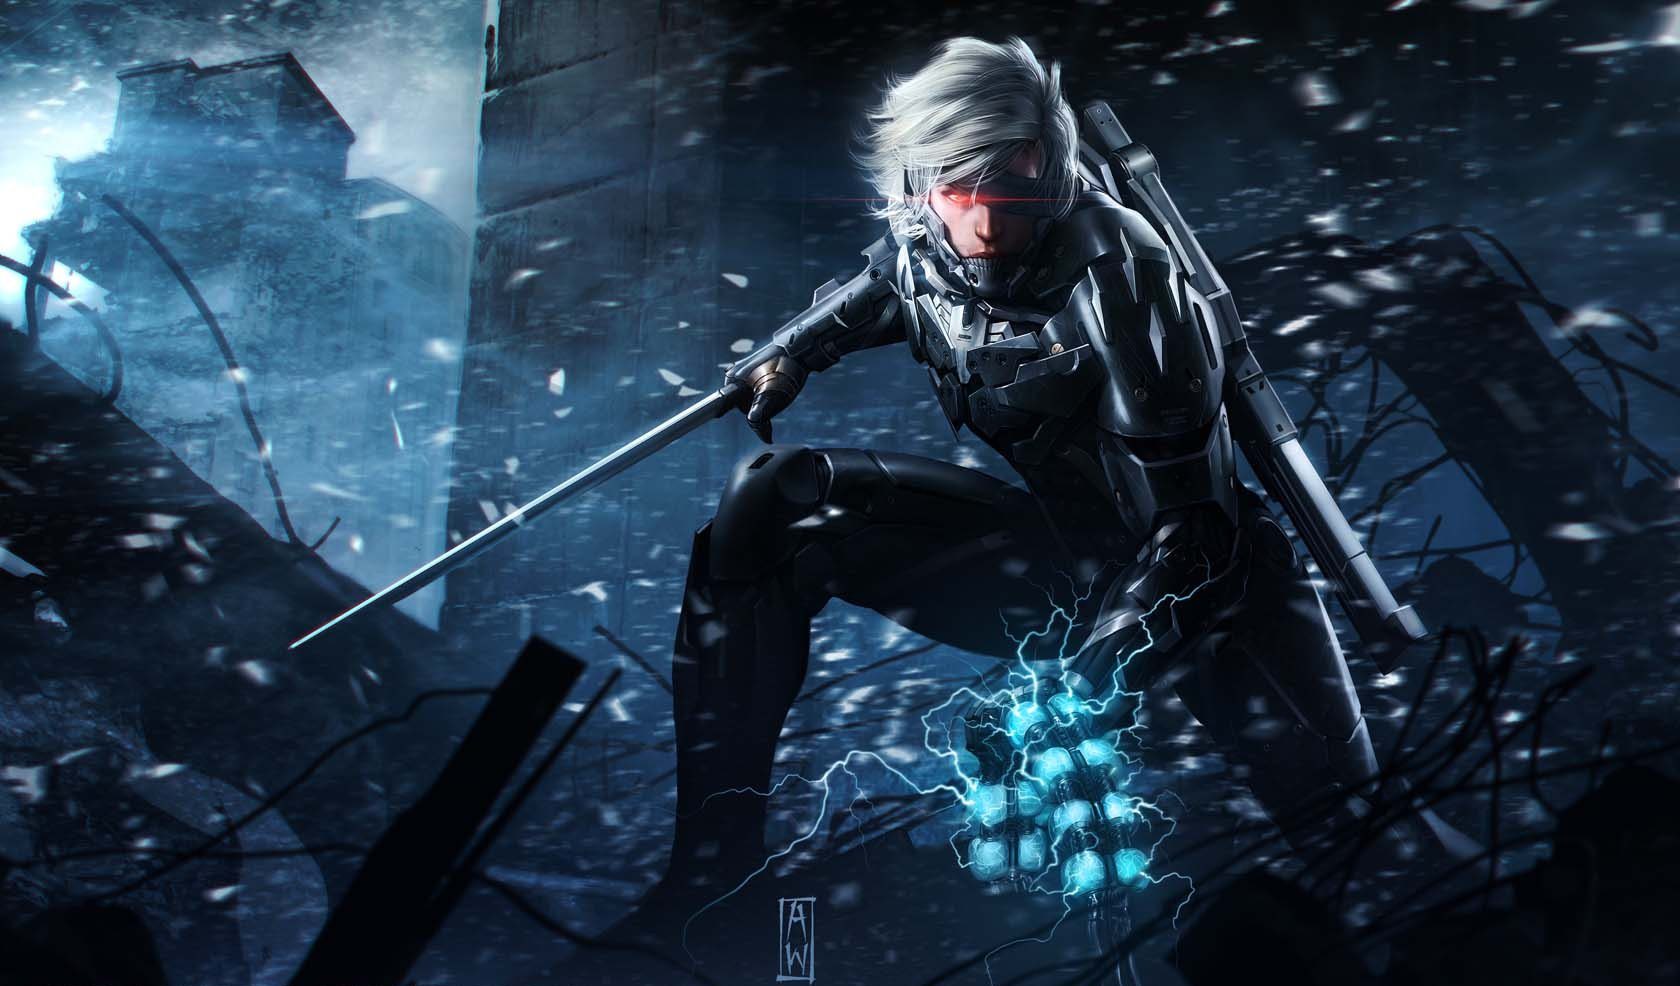 TGS 2012: Metal Gear Solid Rising: Revengeance Trailer